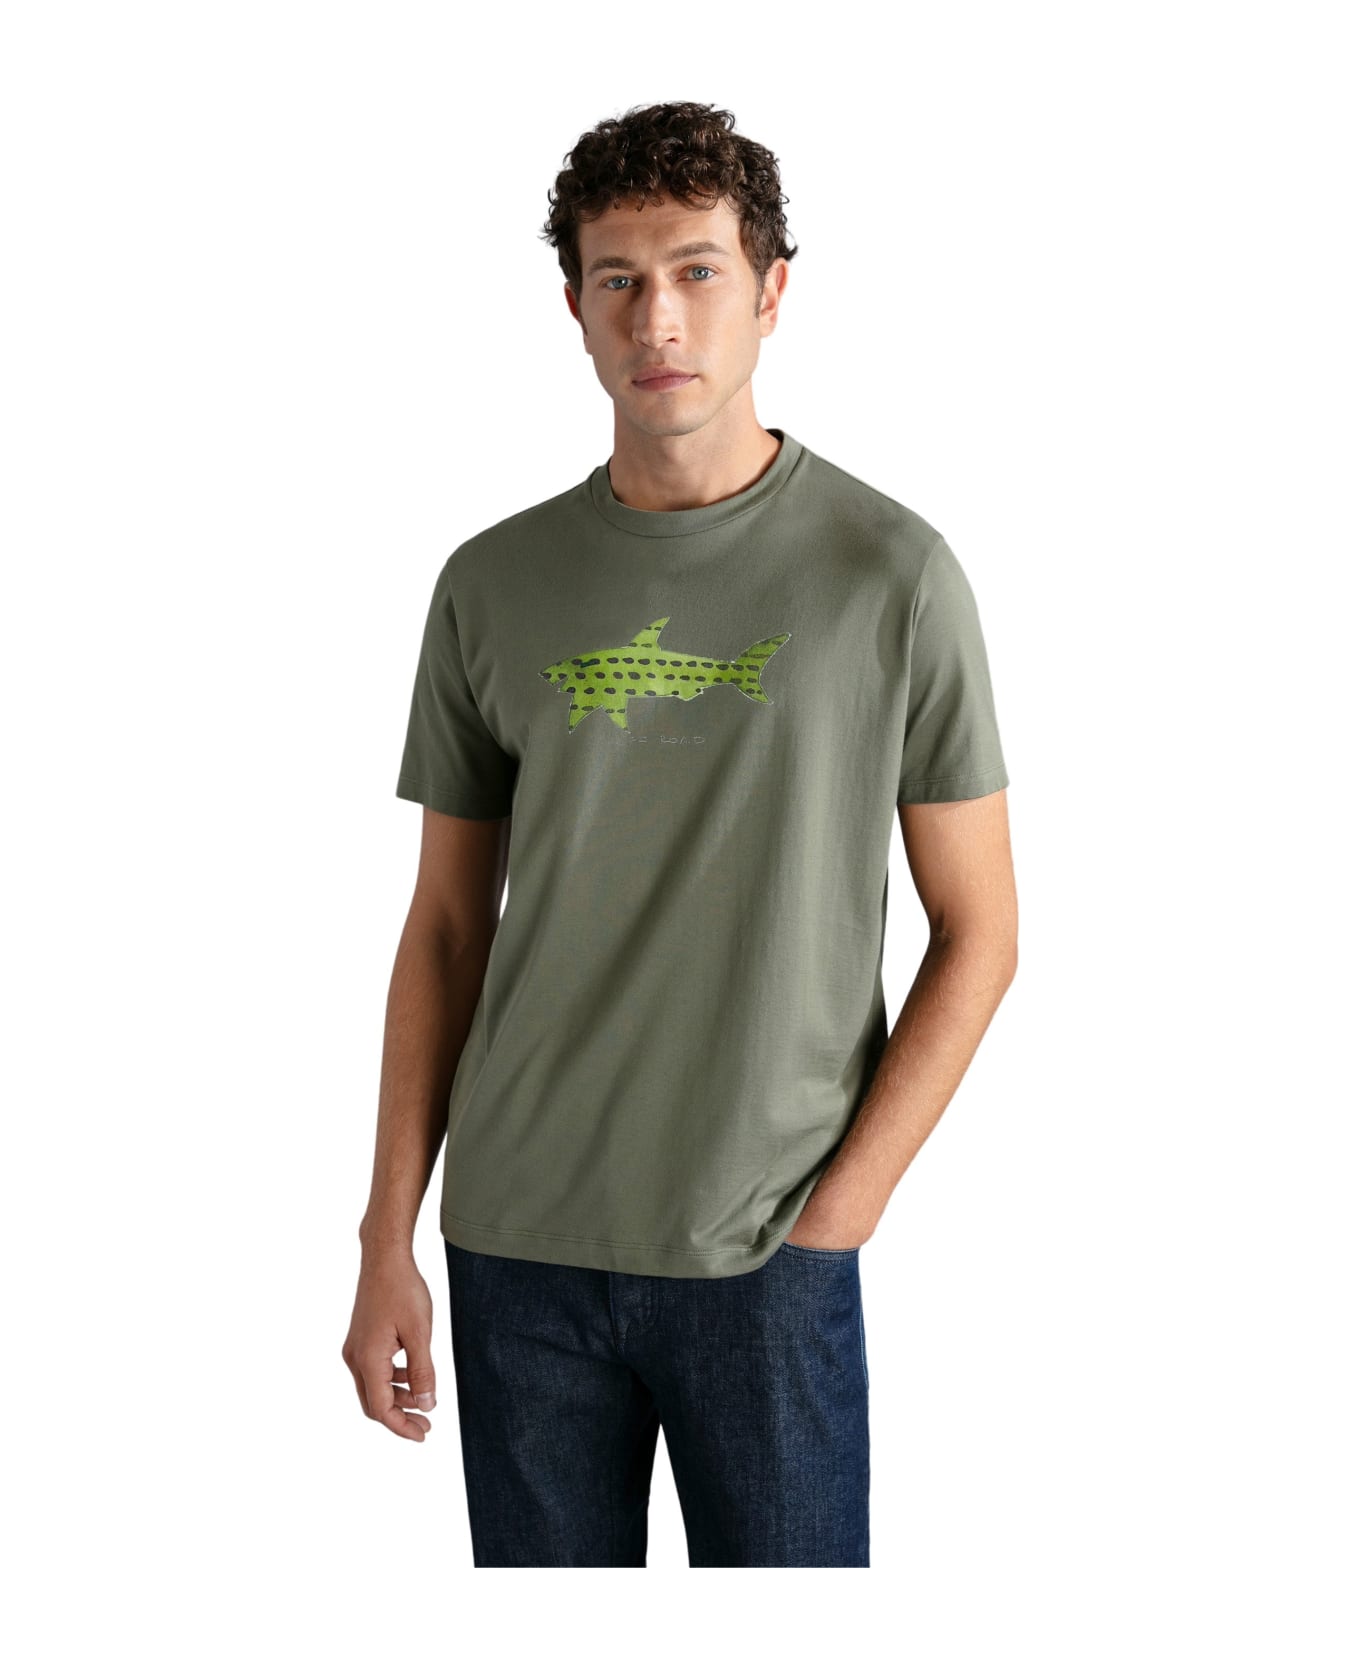 Paul&Shark Tshirt - Green